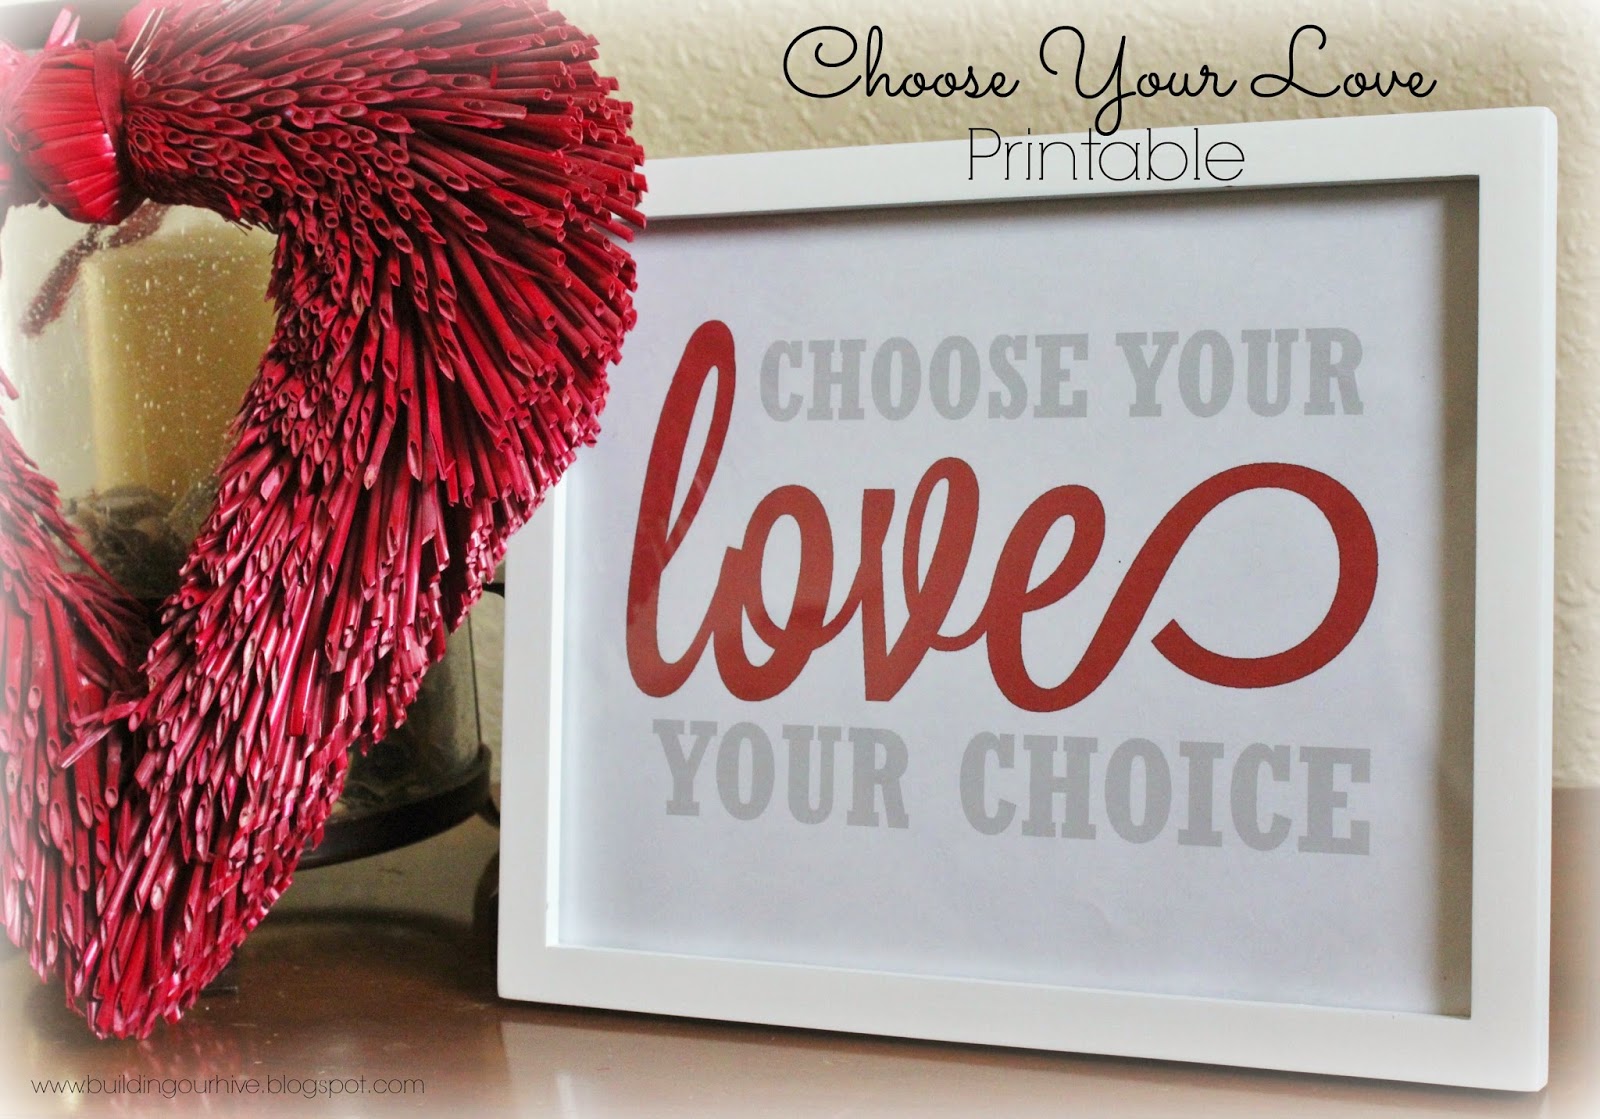 You can choose life. Love choice.